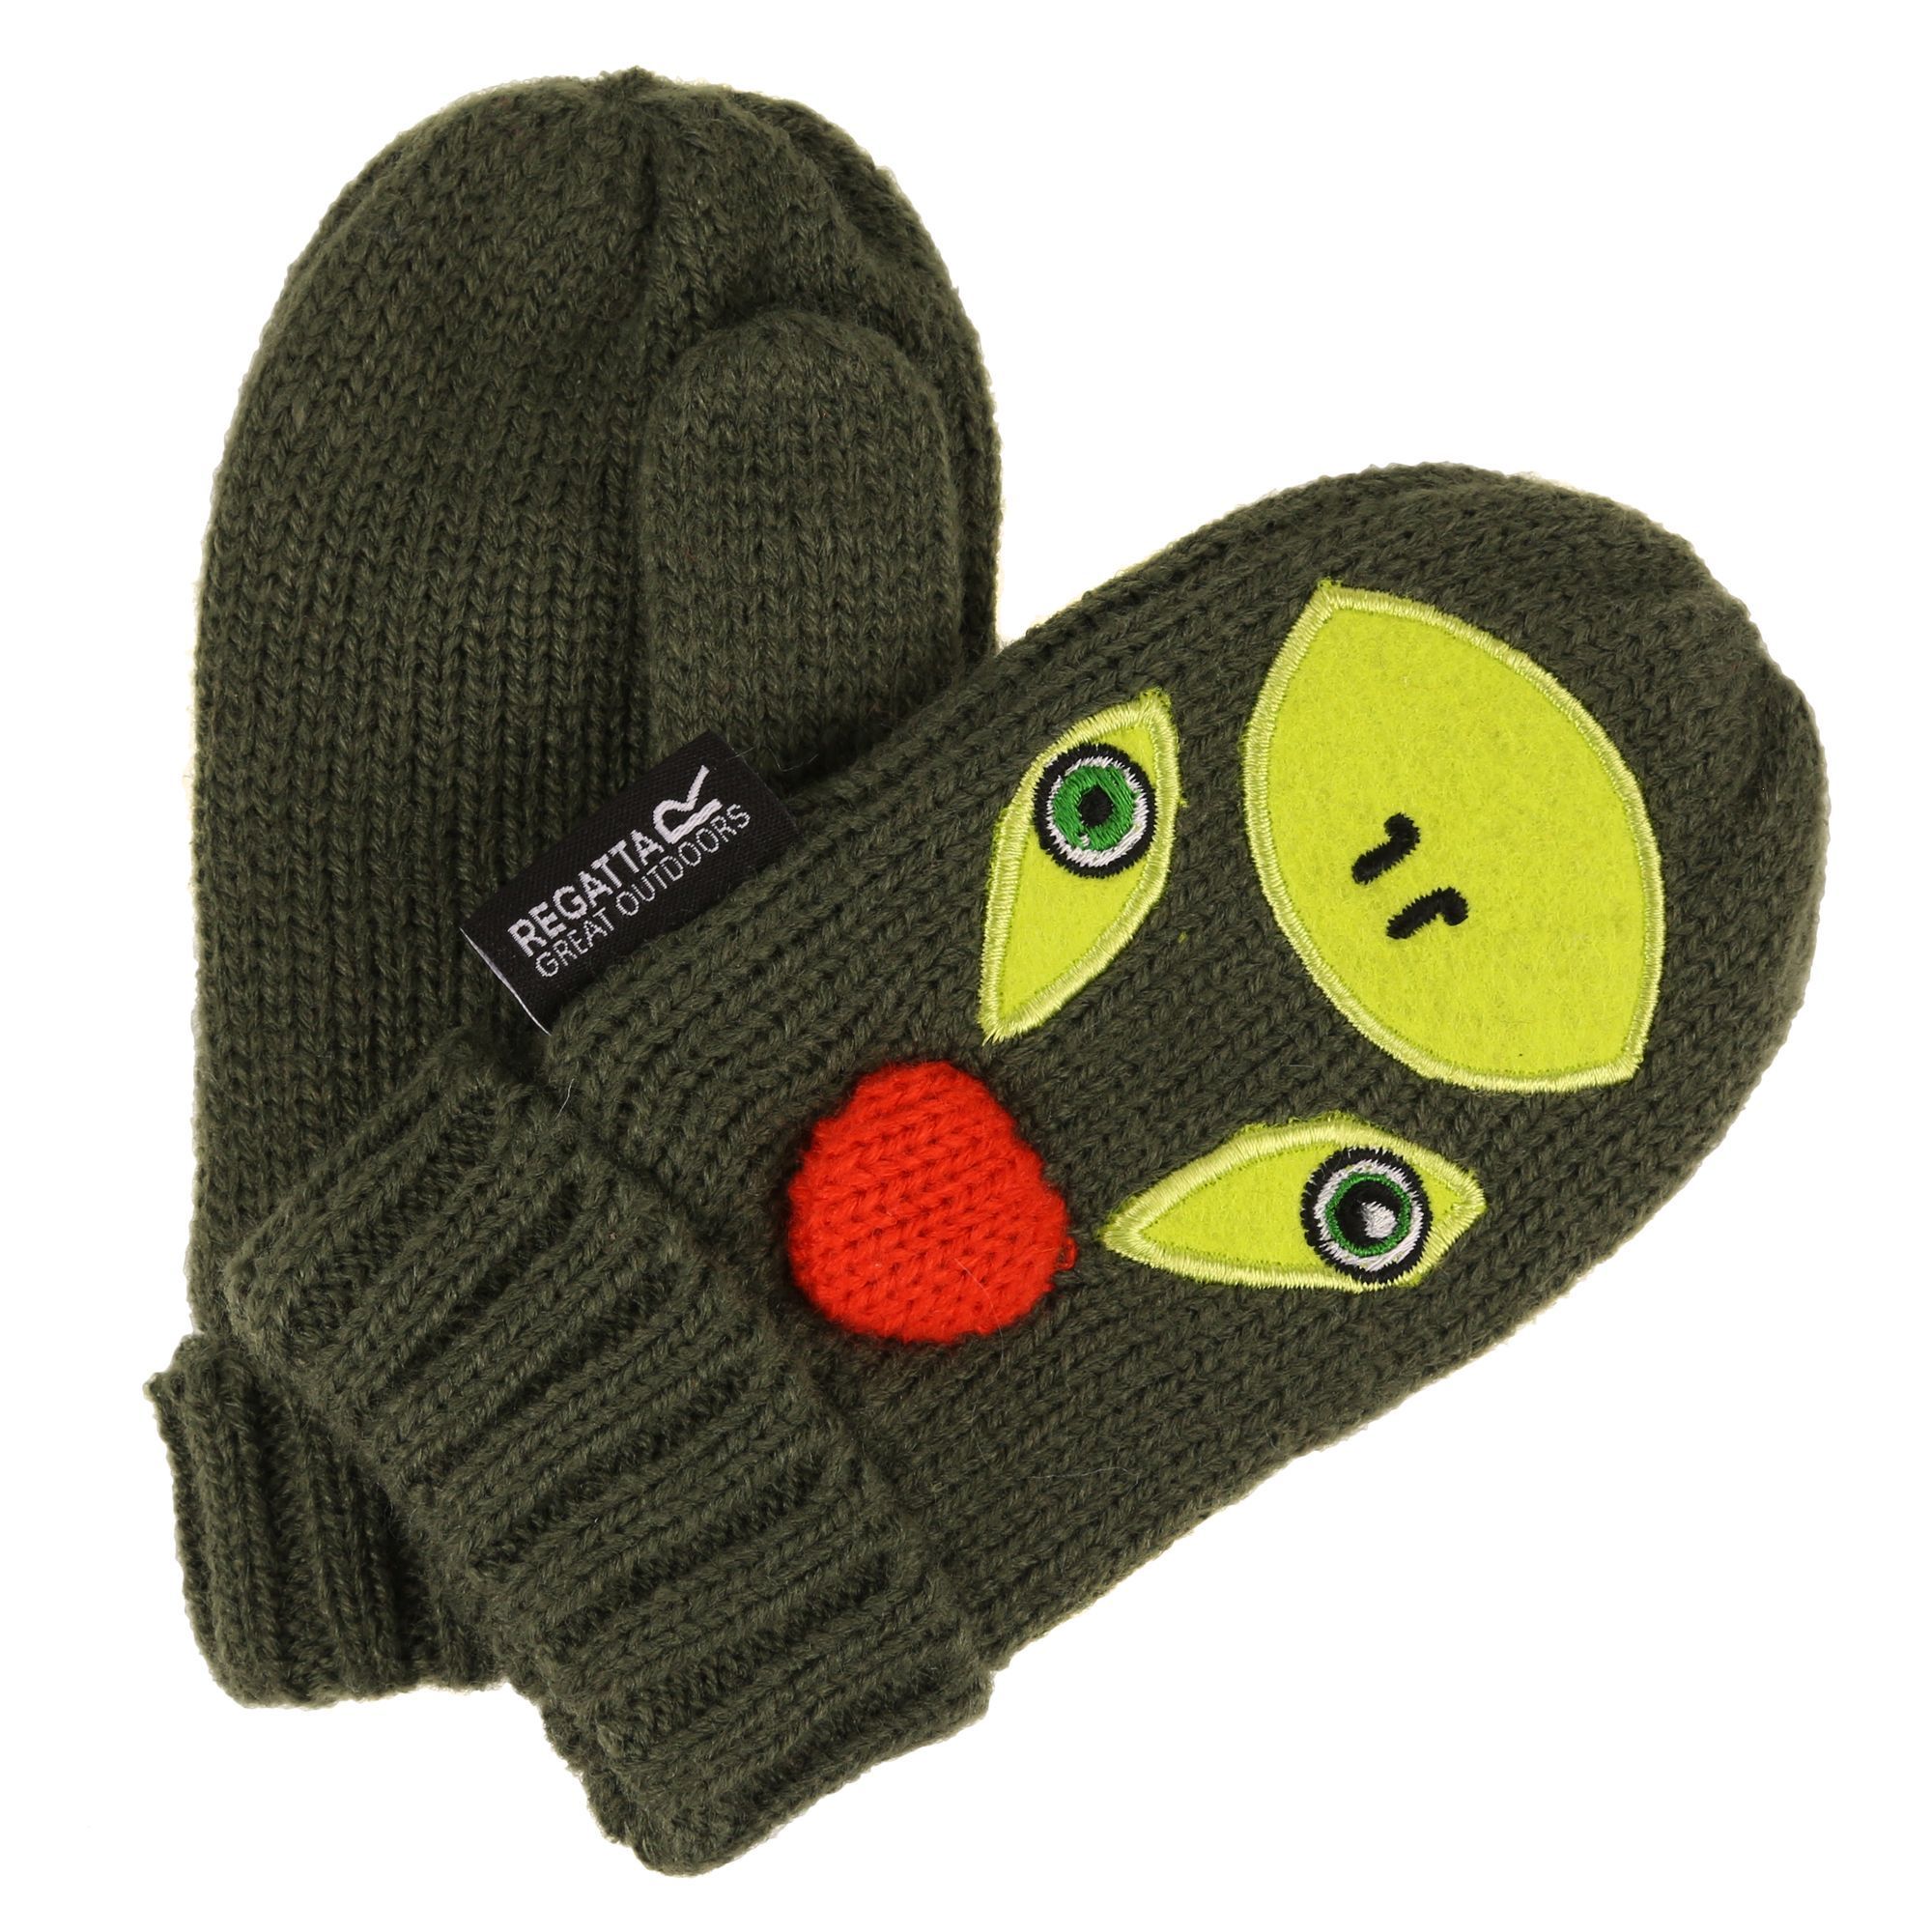 Kids cute animal design mittens with cosy fleece lining. Fabric: 100% Acrylic.